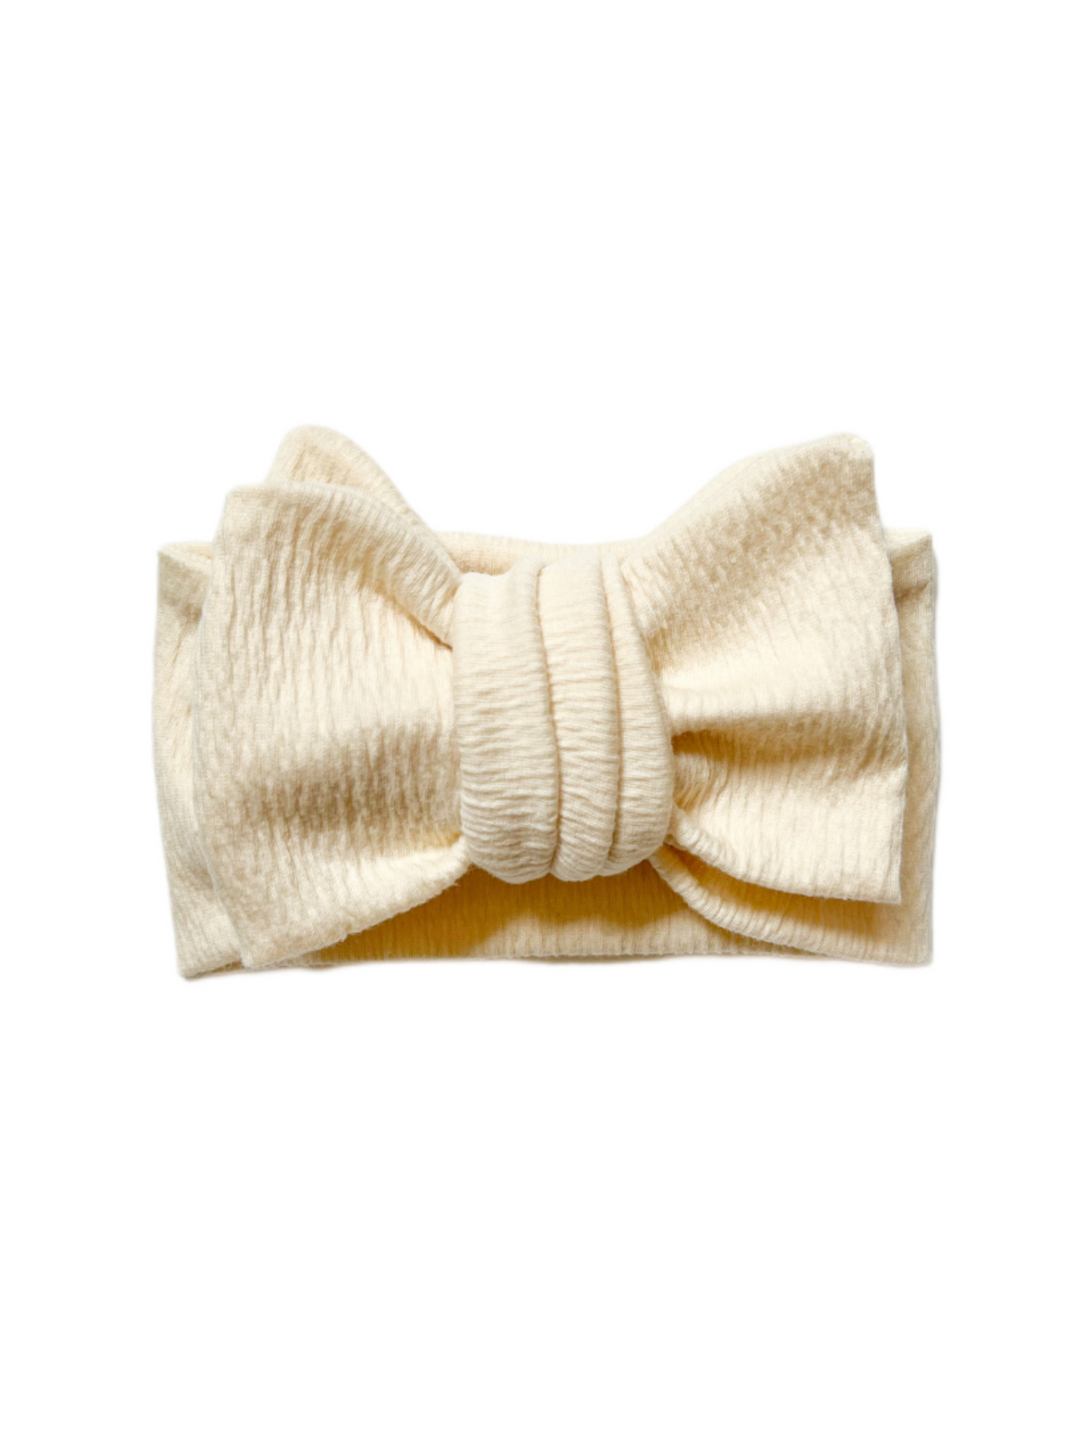 Oversized Crinkle Knit Bow - Shortbread